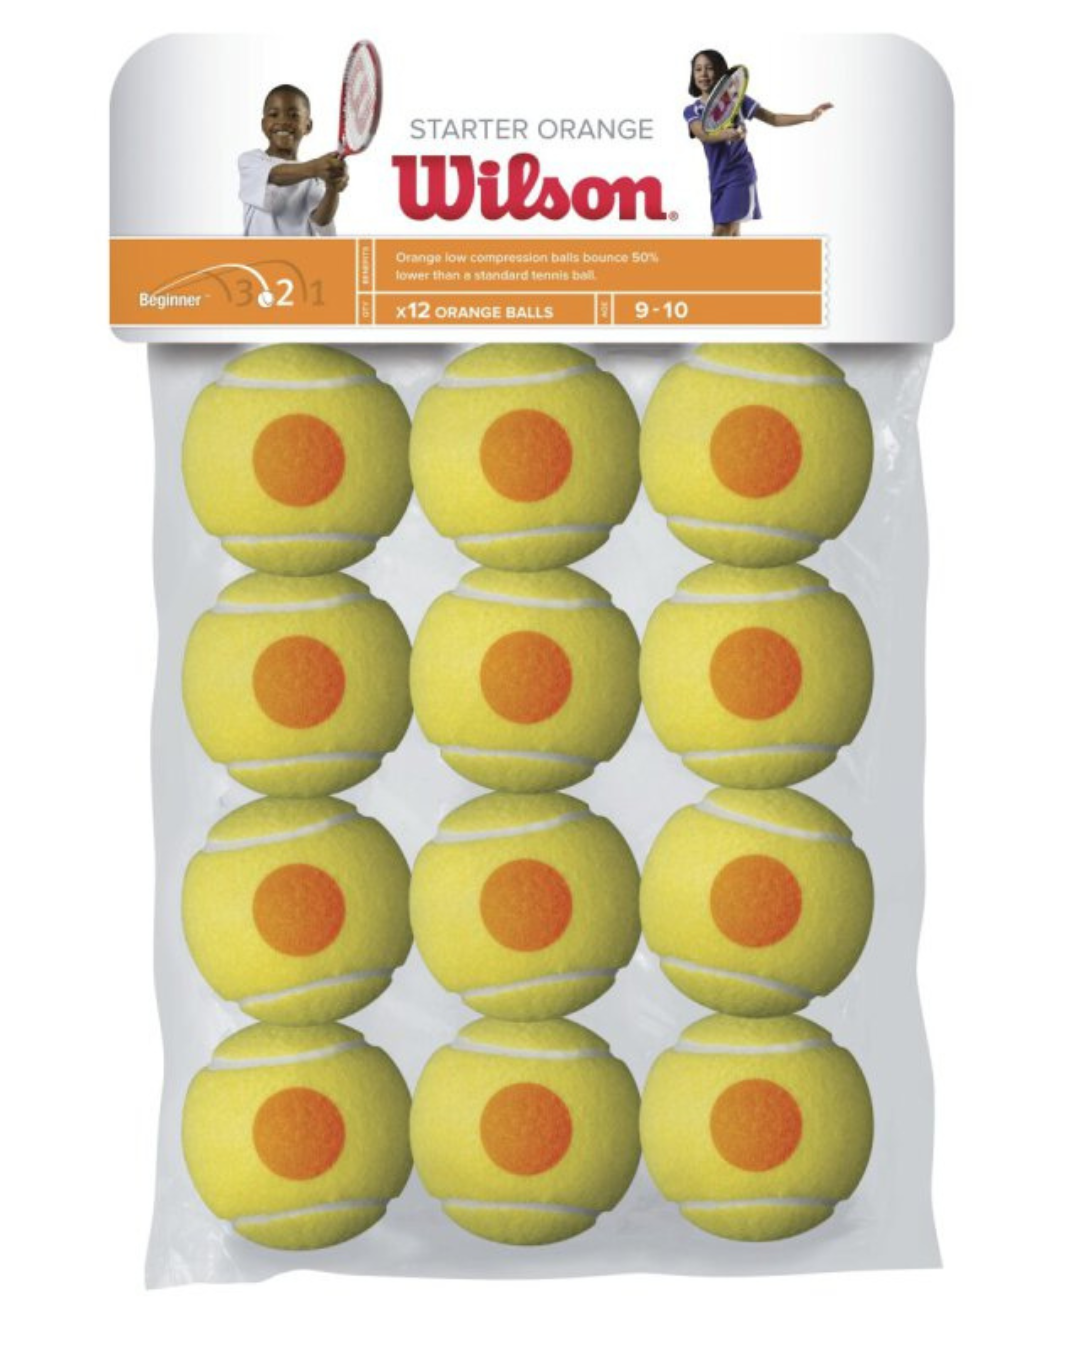 Wilson Orange bold 12 pack